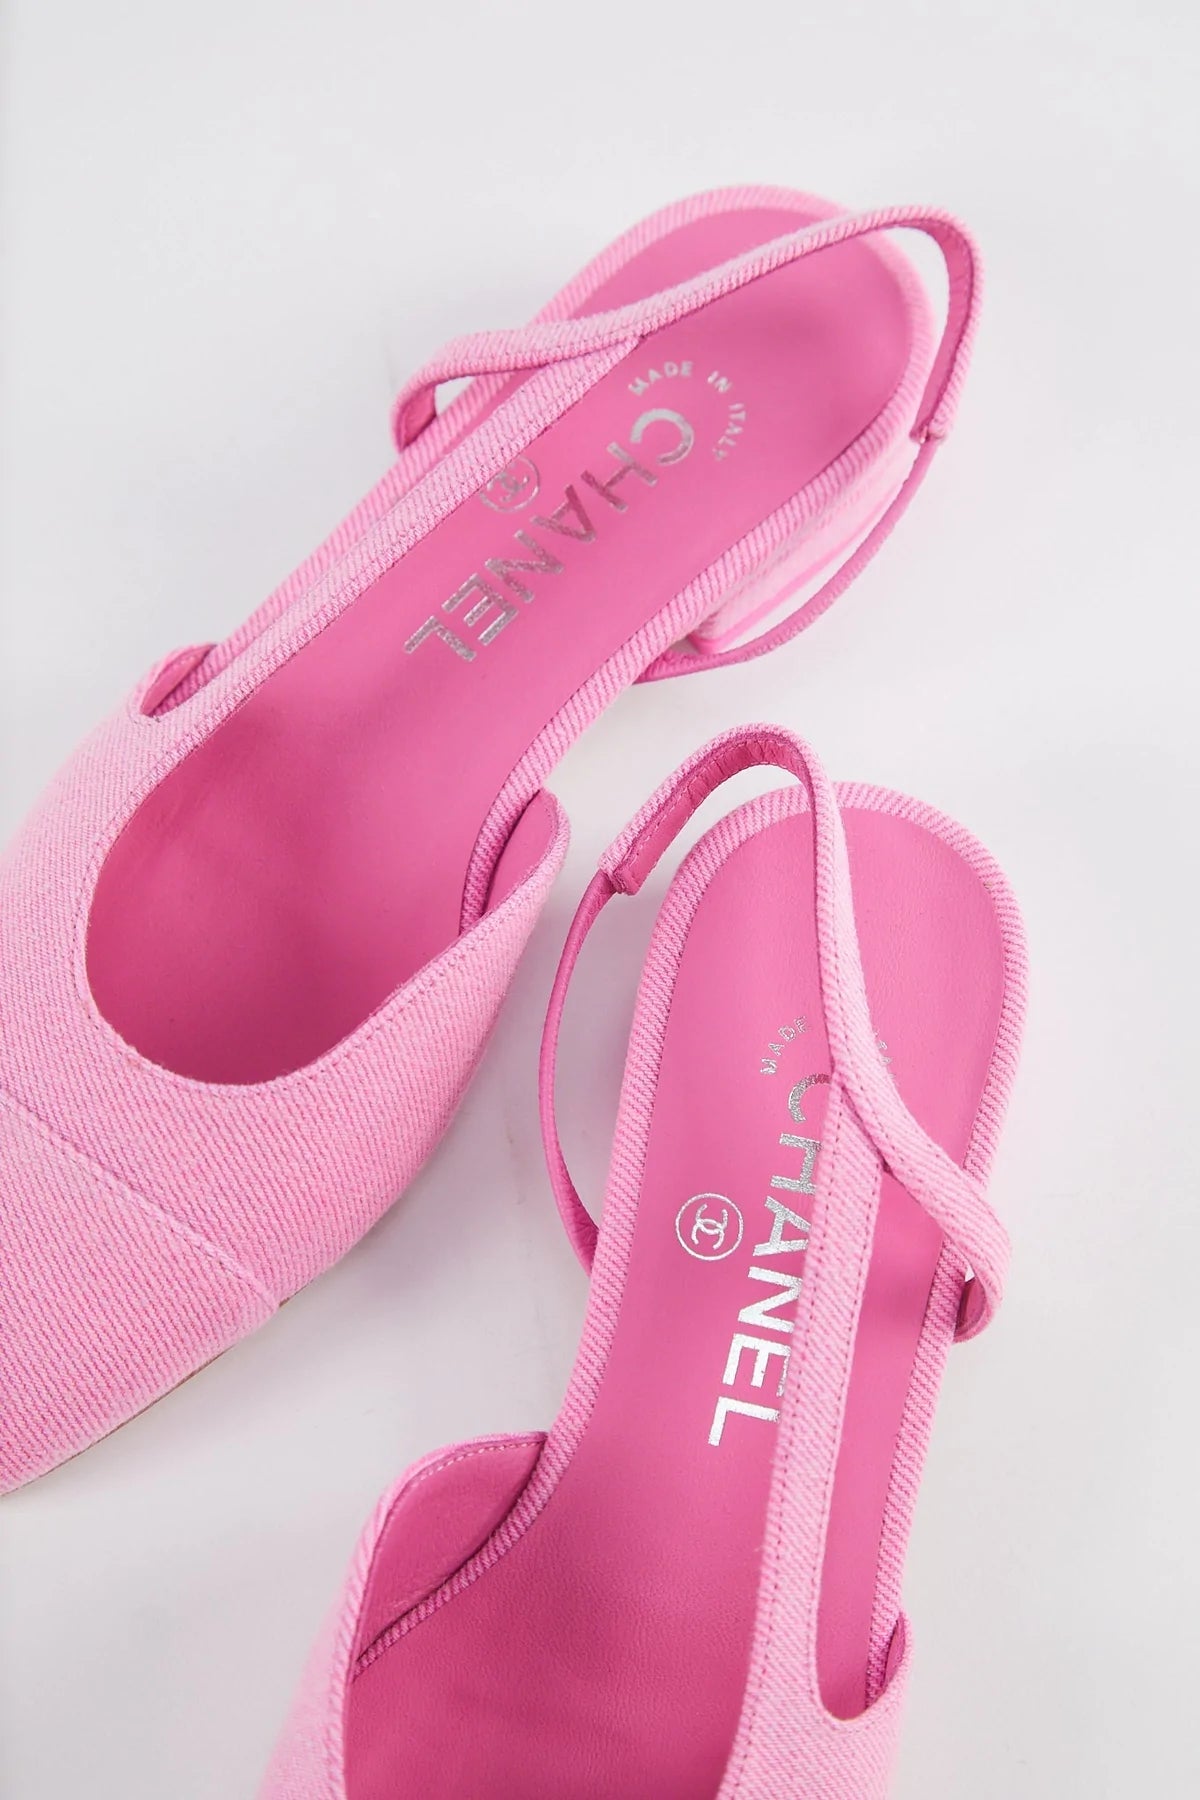 Chanel Denim Slingback Mule (Pink)